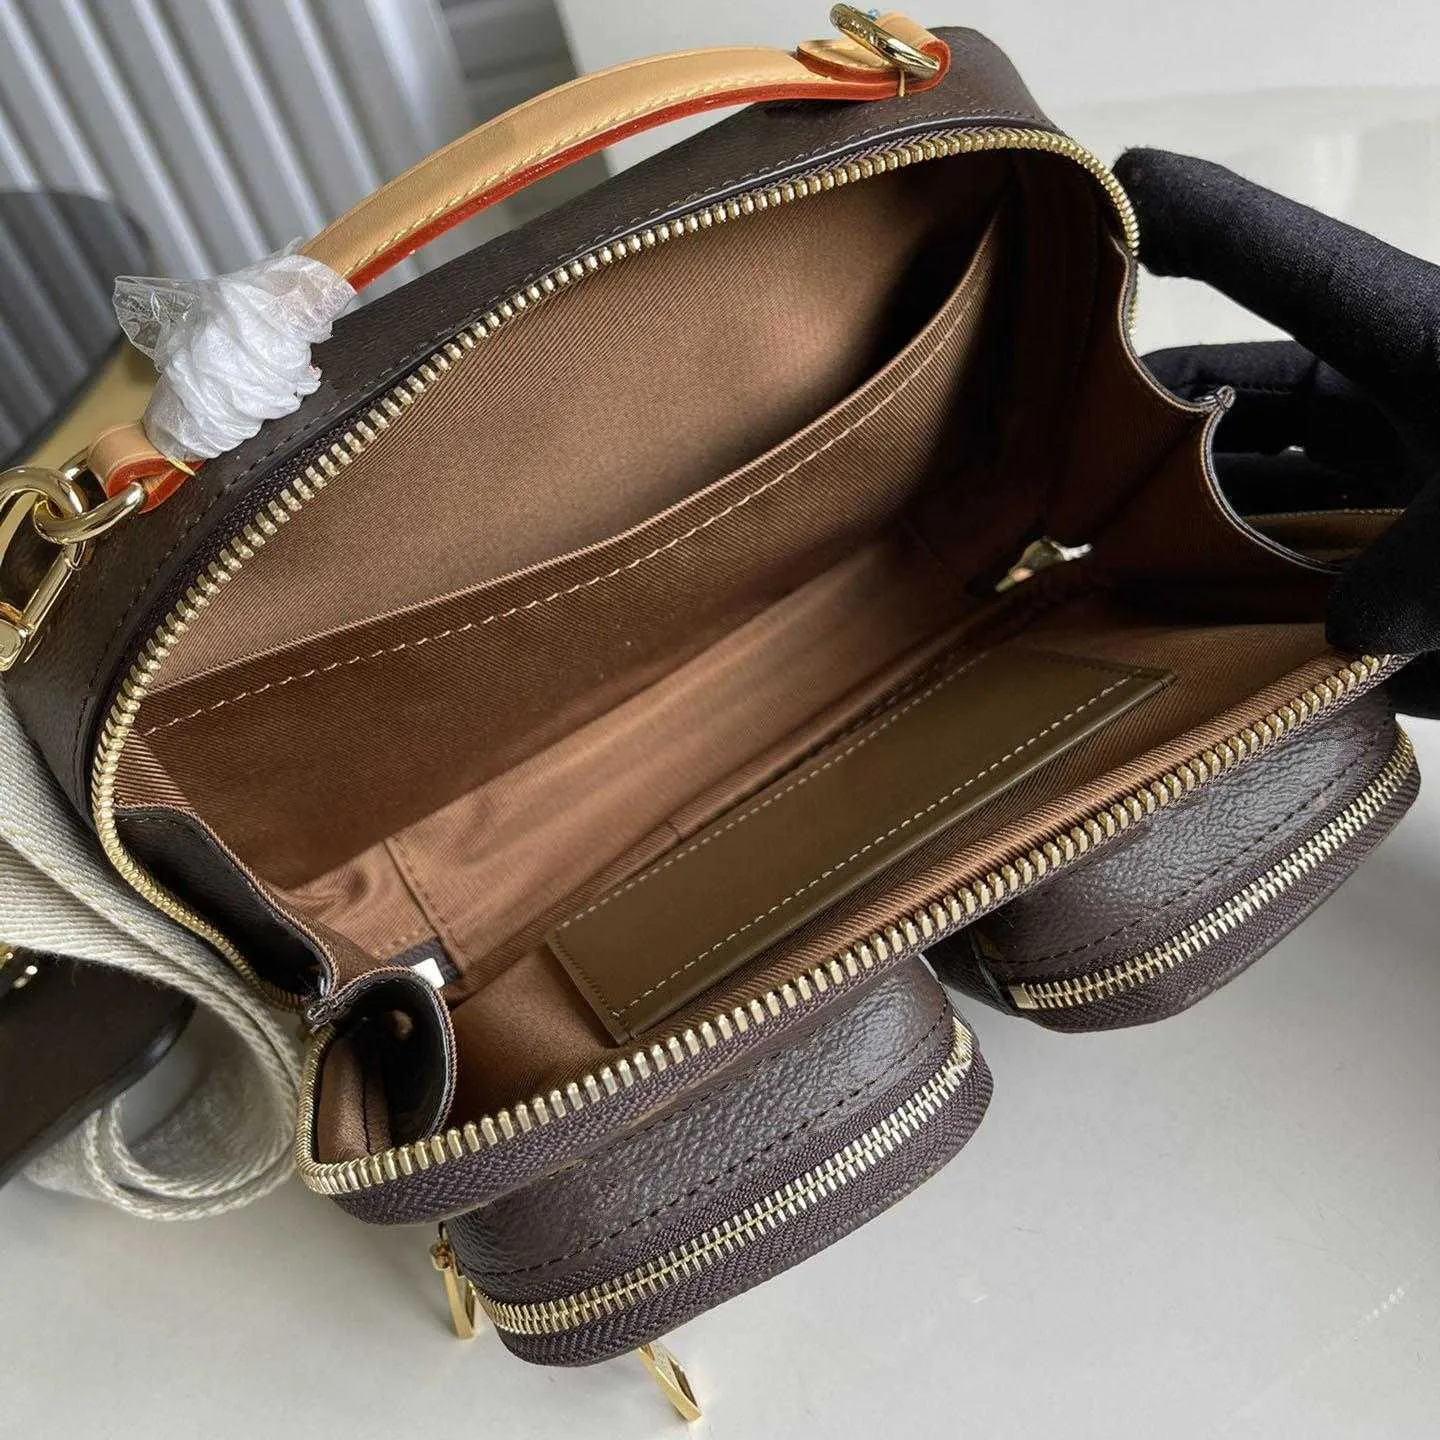 UTILITY Crossbody Bag Designers Camera Shoulder Bags Luxury Handbag Fashion